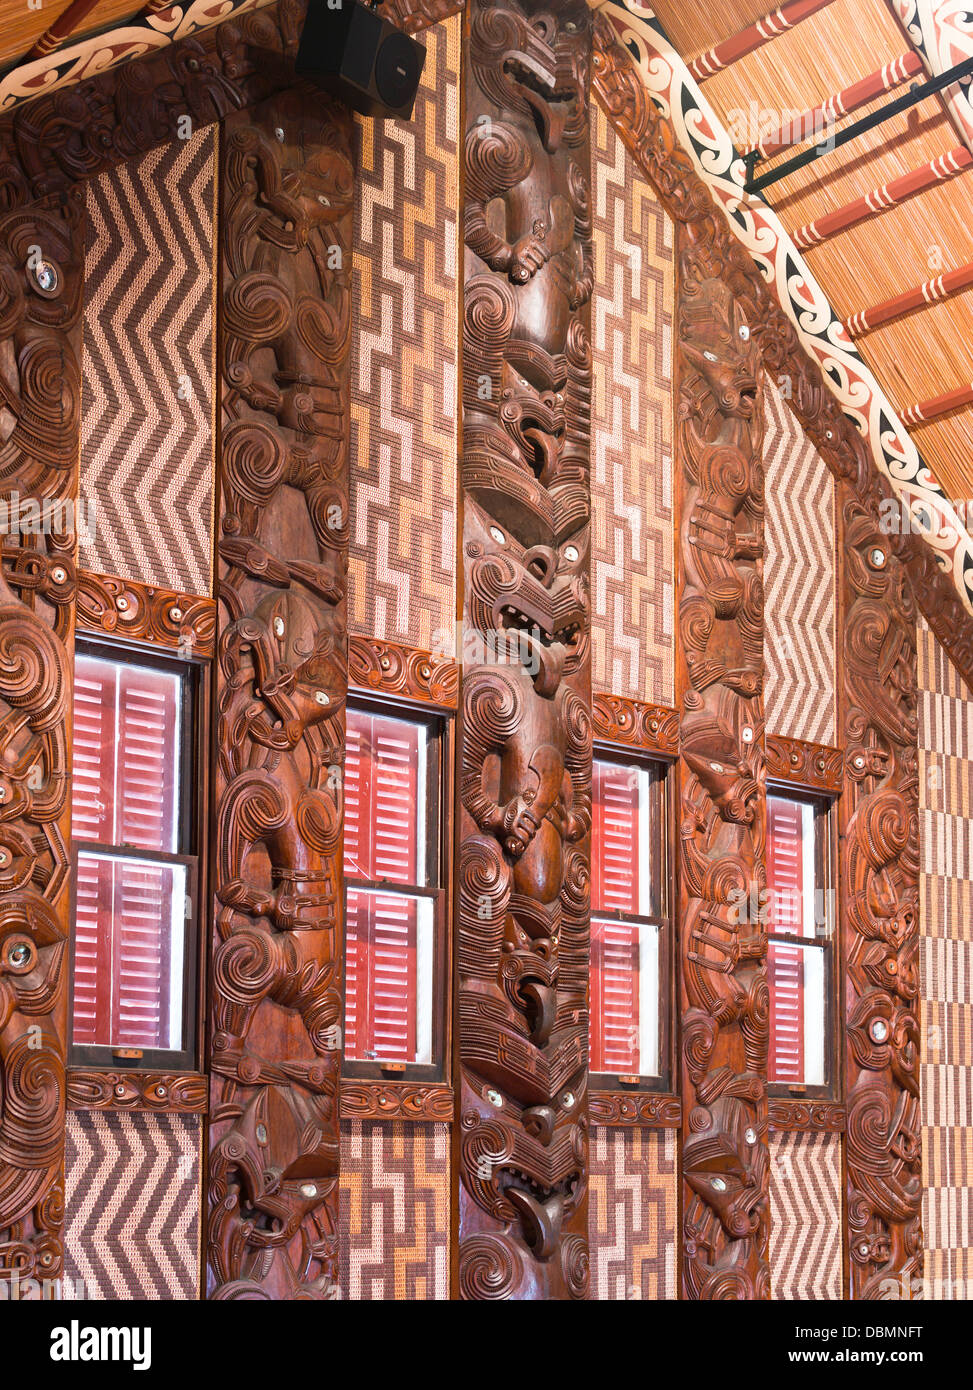 dh Waitangi Treaty Grounds BAY OF ISLANDS NEW ZEALAND Whare Runanga Interior Maori meeting house carvings carving marae culture Stock Photo